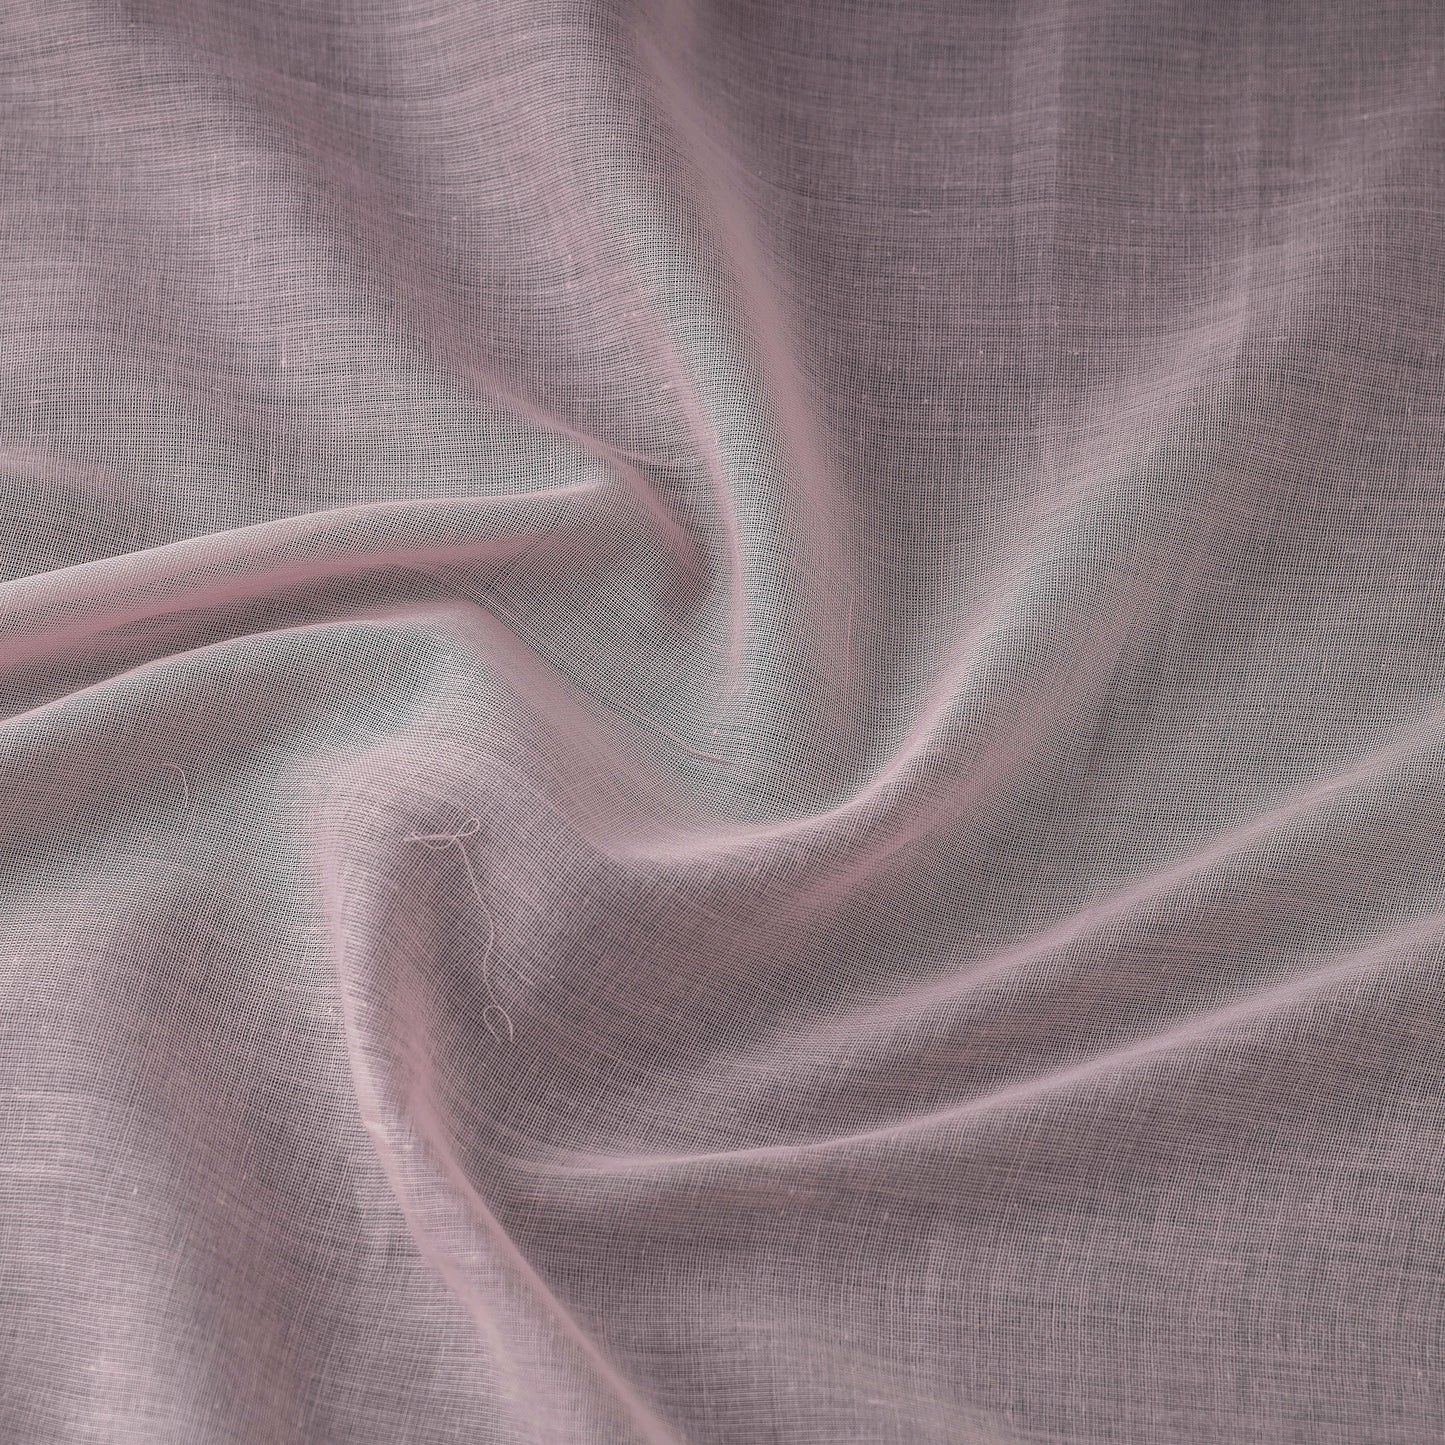 Pink - Prewashed Plain Dyed Cotton Fabric 14